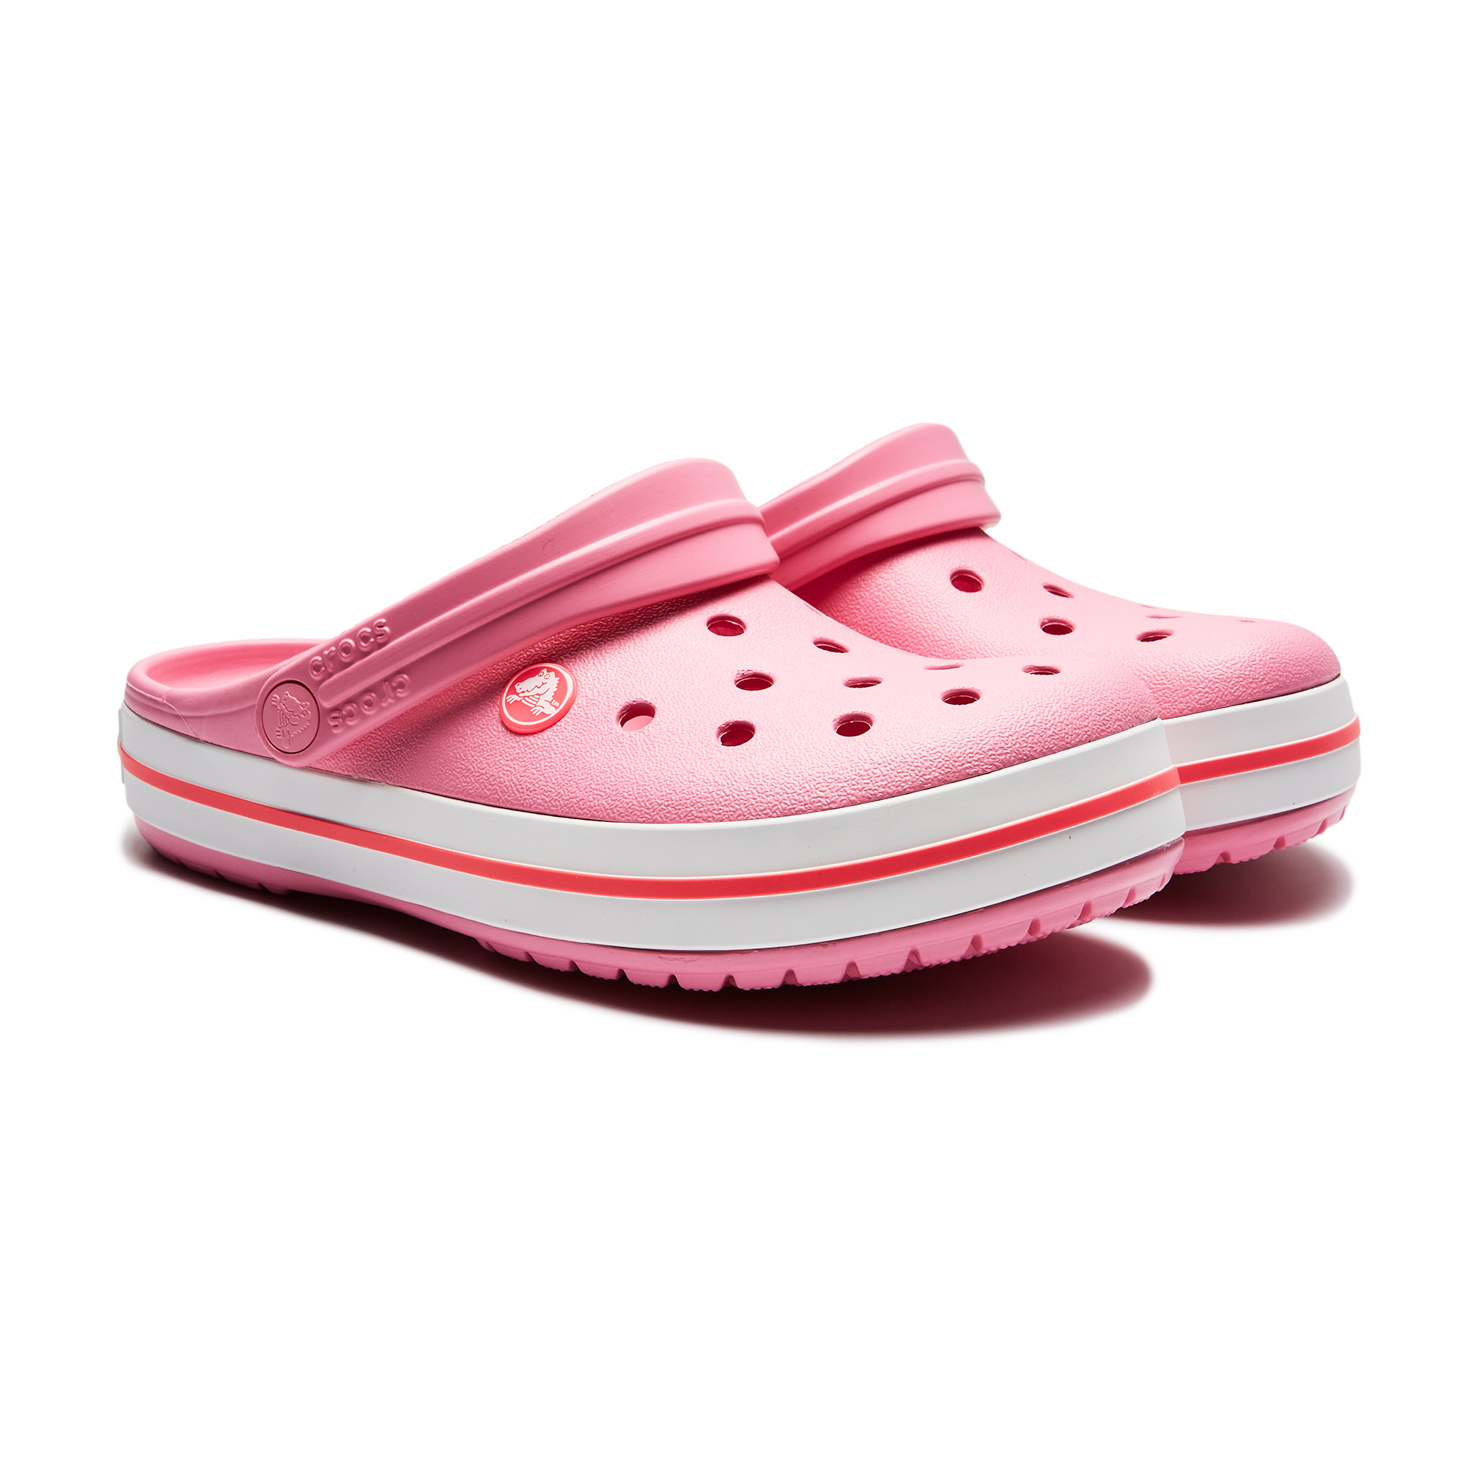 Crocband Crocs, размер 36-37, цвет розовый CR11016 - фото 2